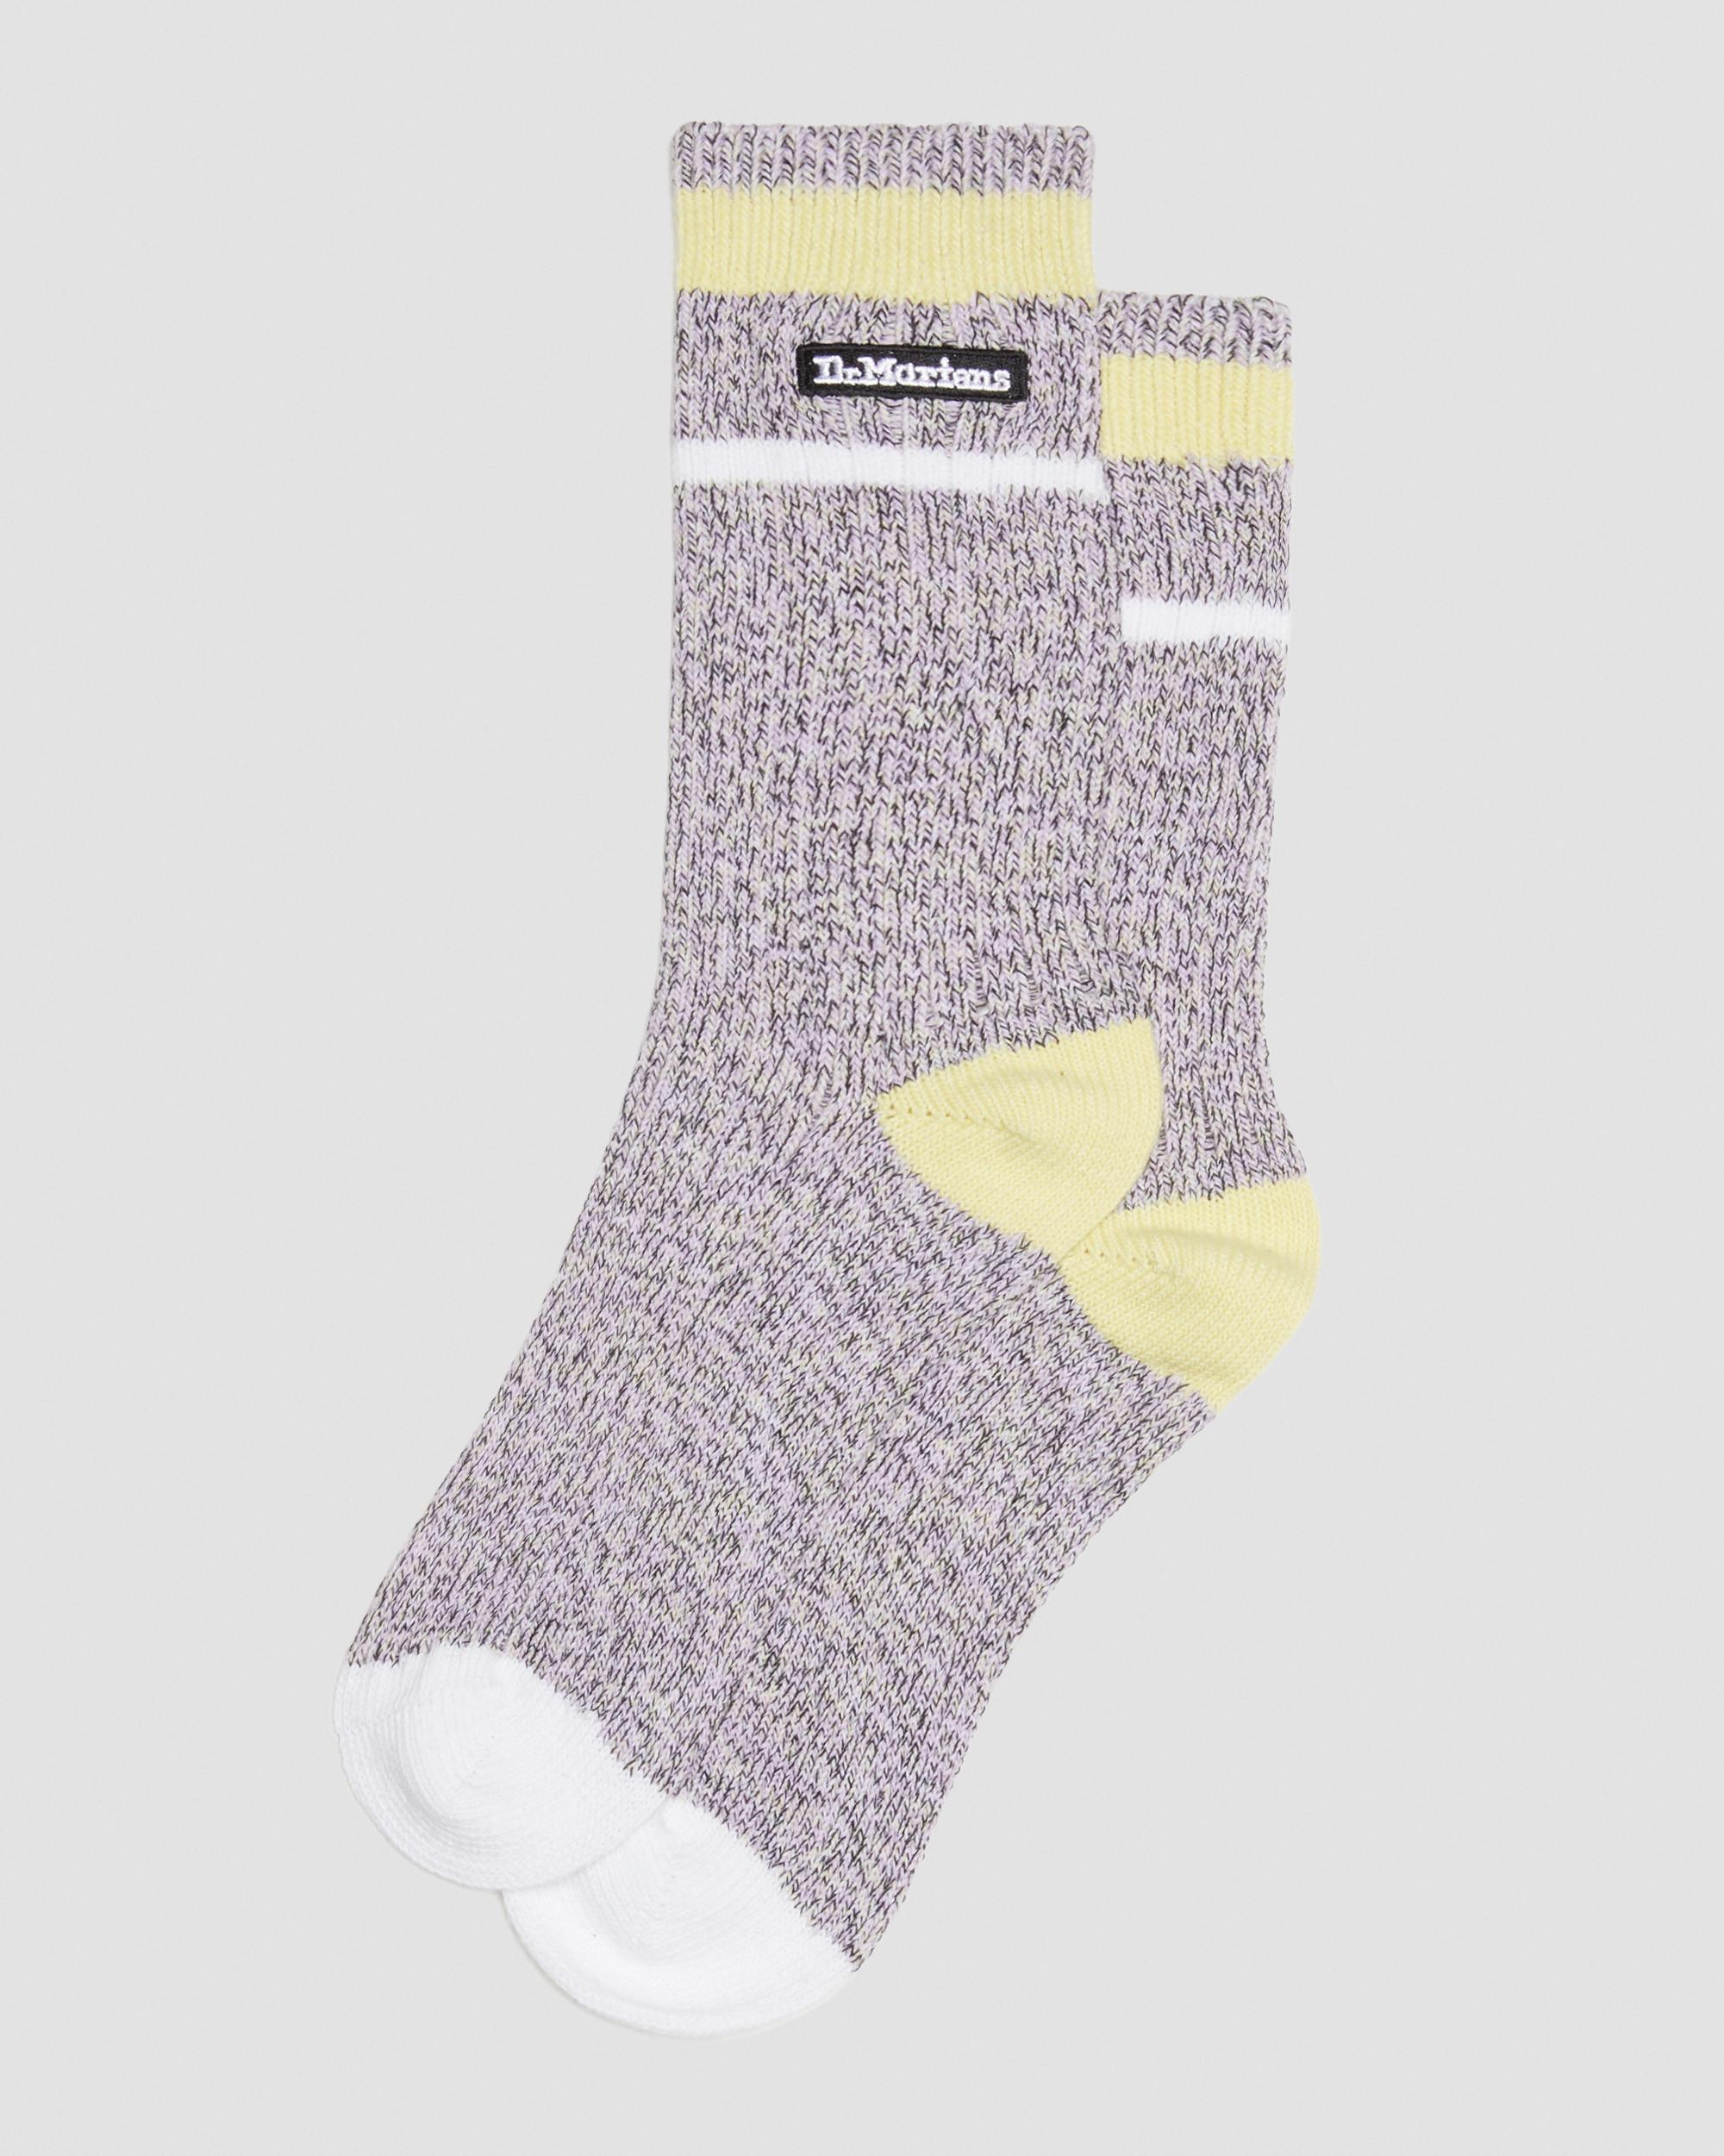 Marl Organic Socks in Charcoal Grey